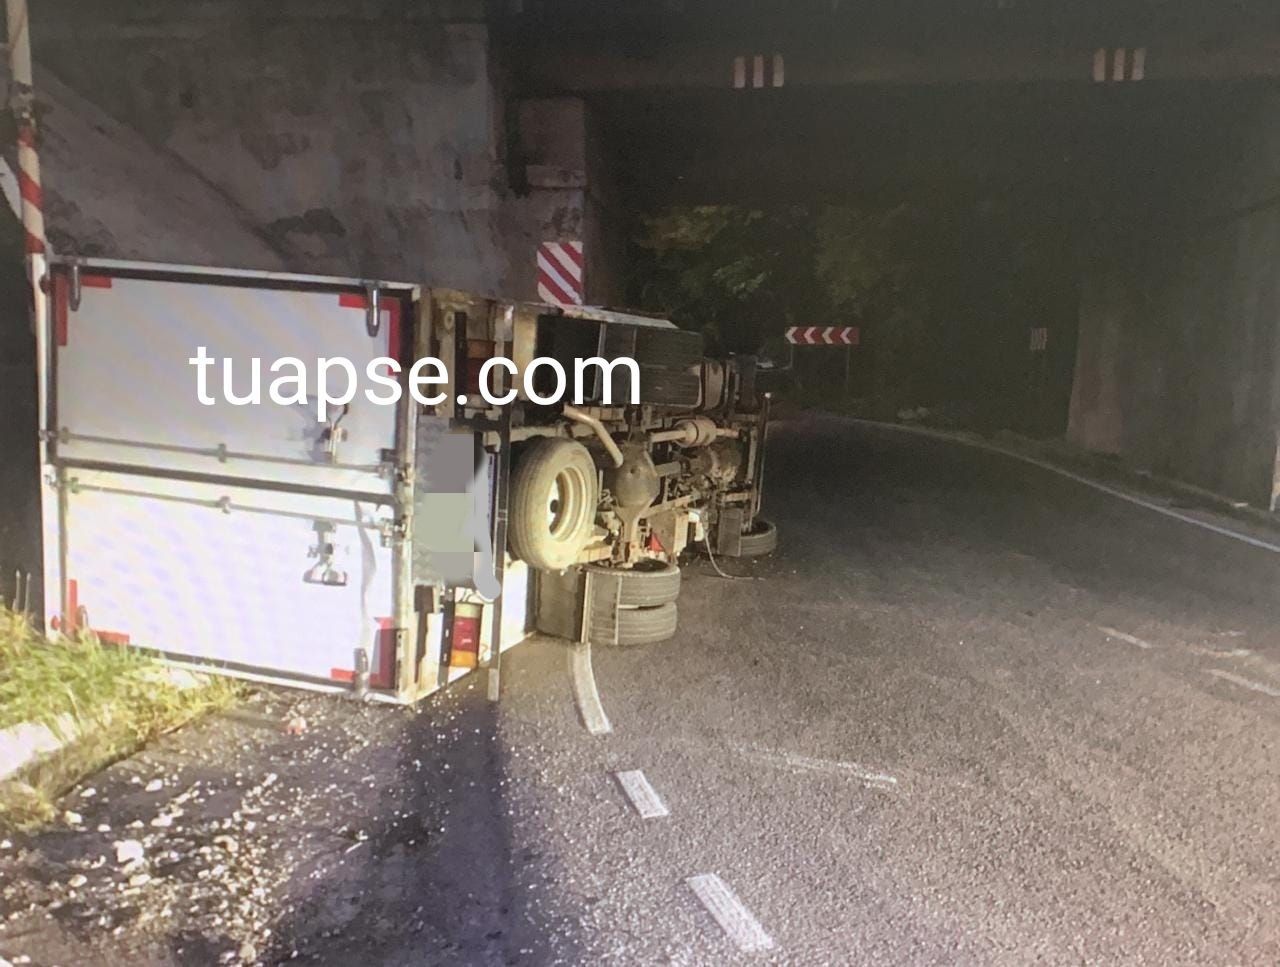 Под Туапсе произошло сразу два ДТП с тремя грузовиками